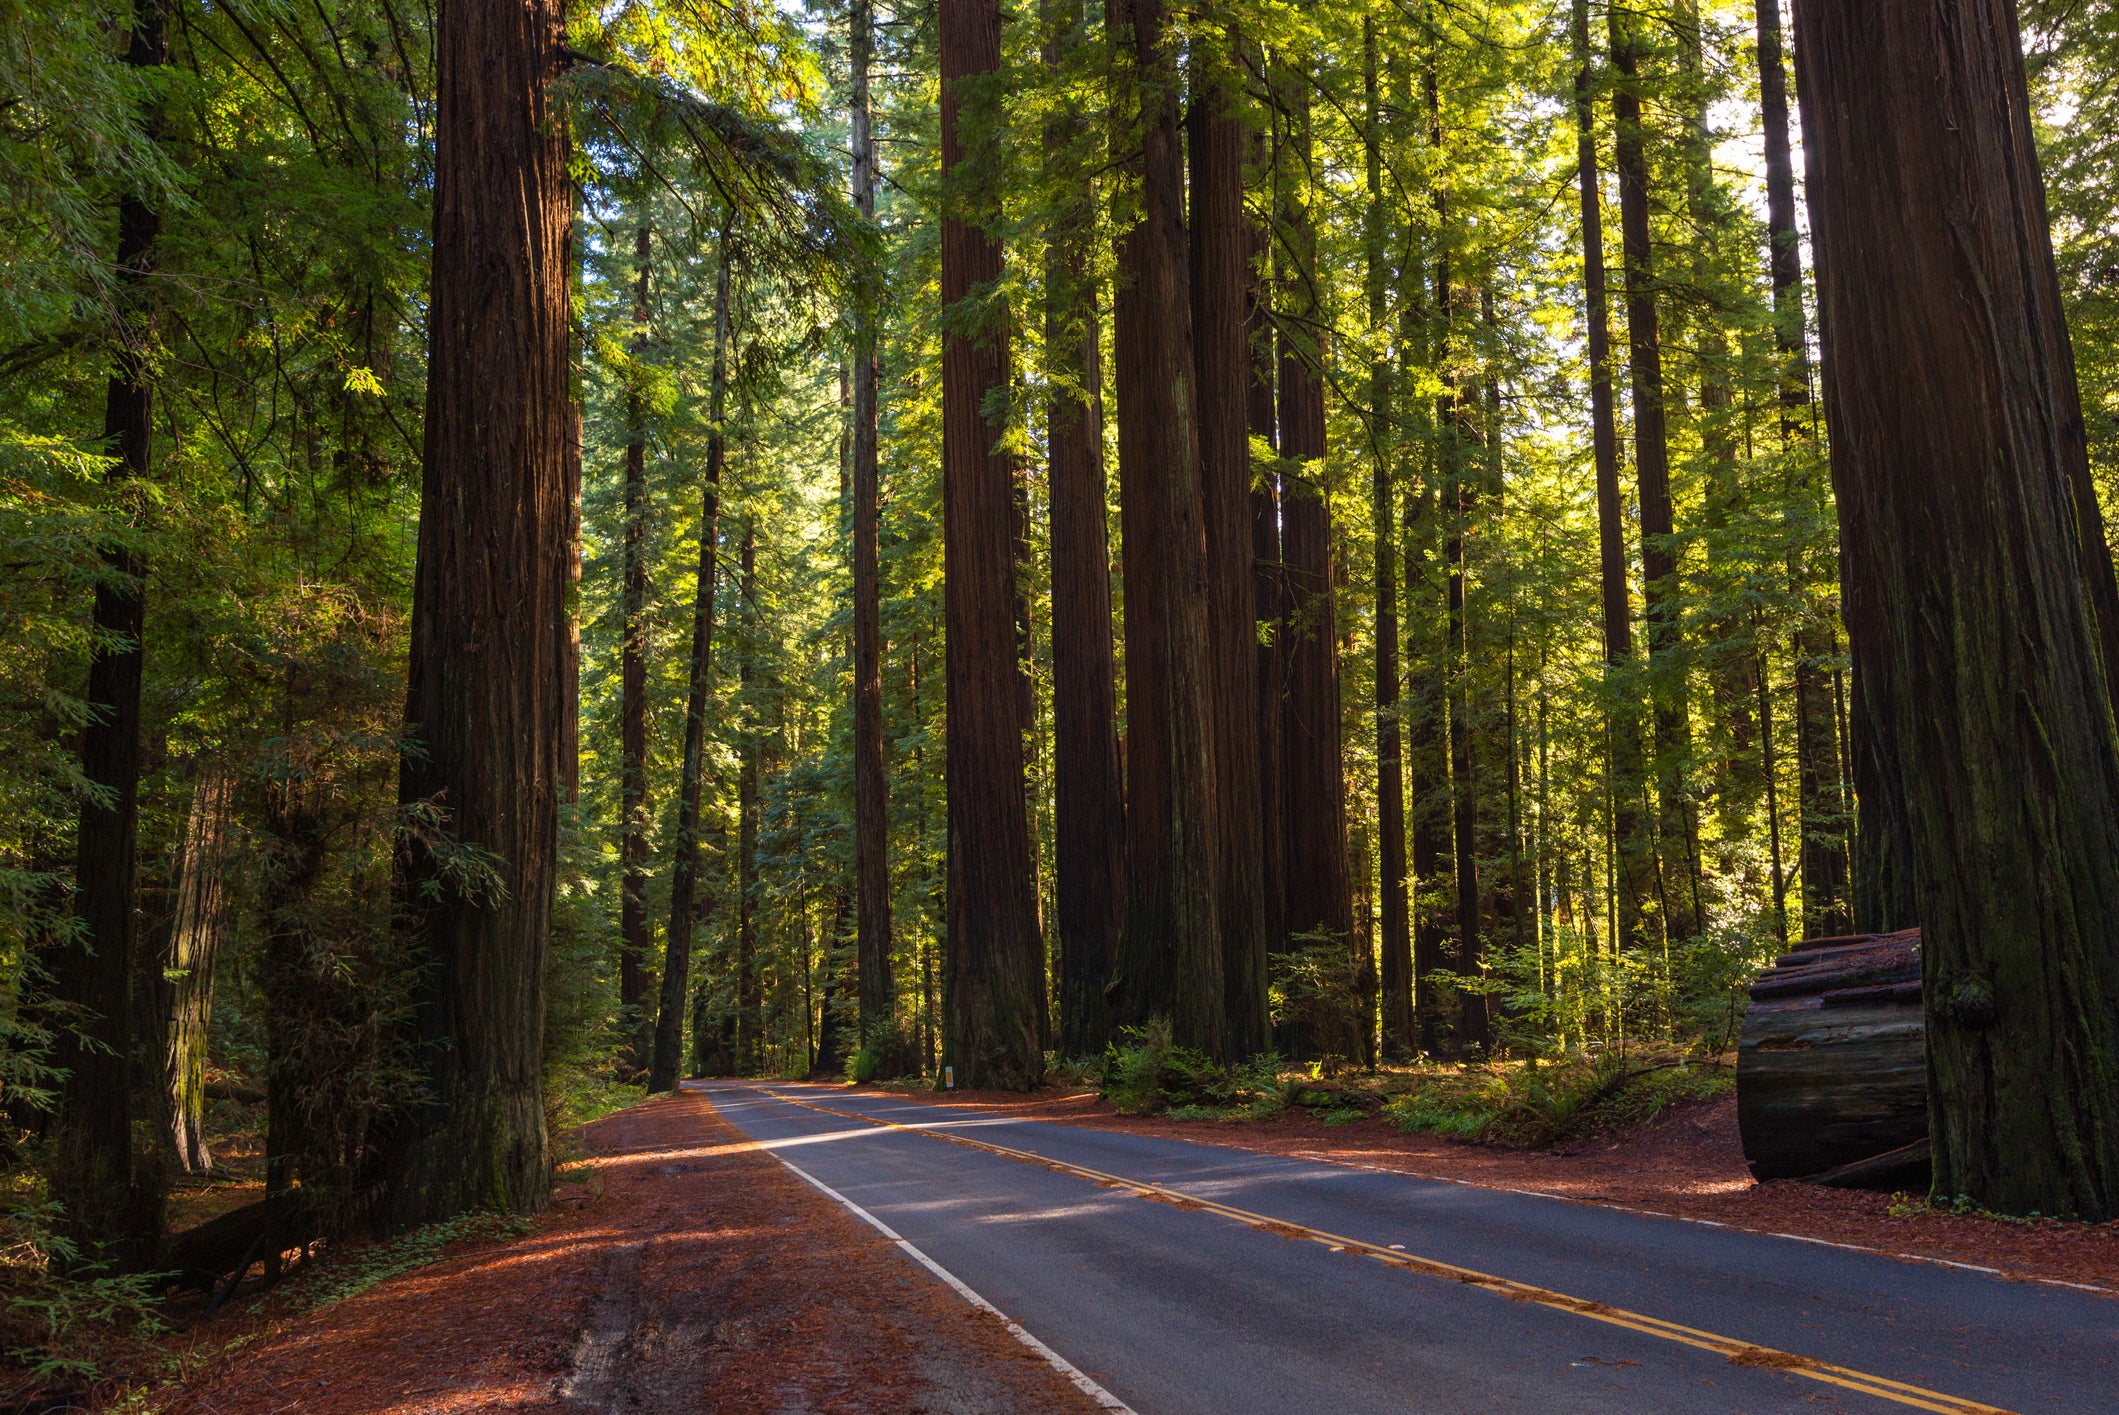 Avenue of giant redwood California